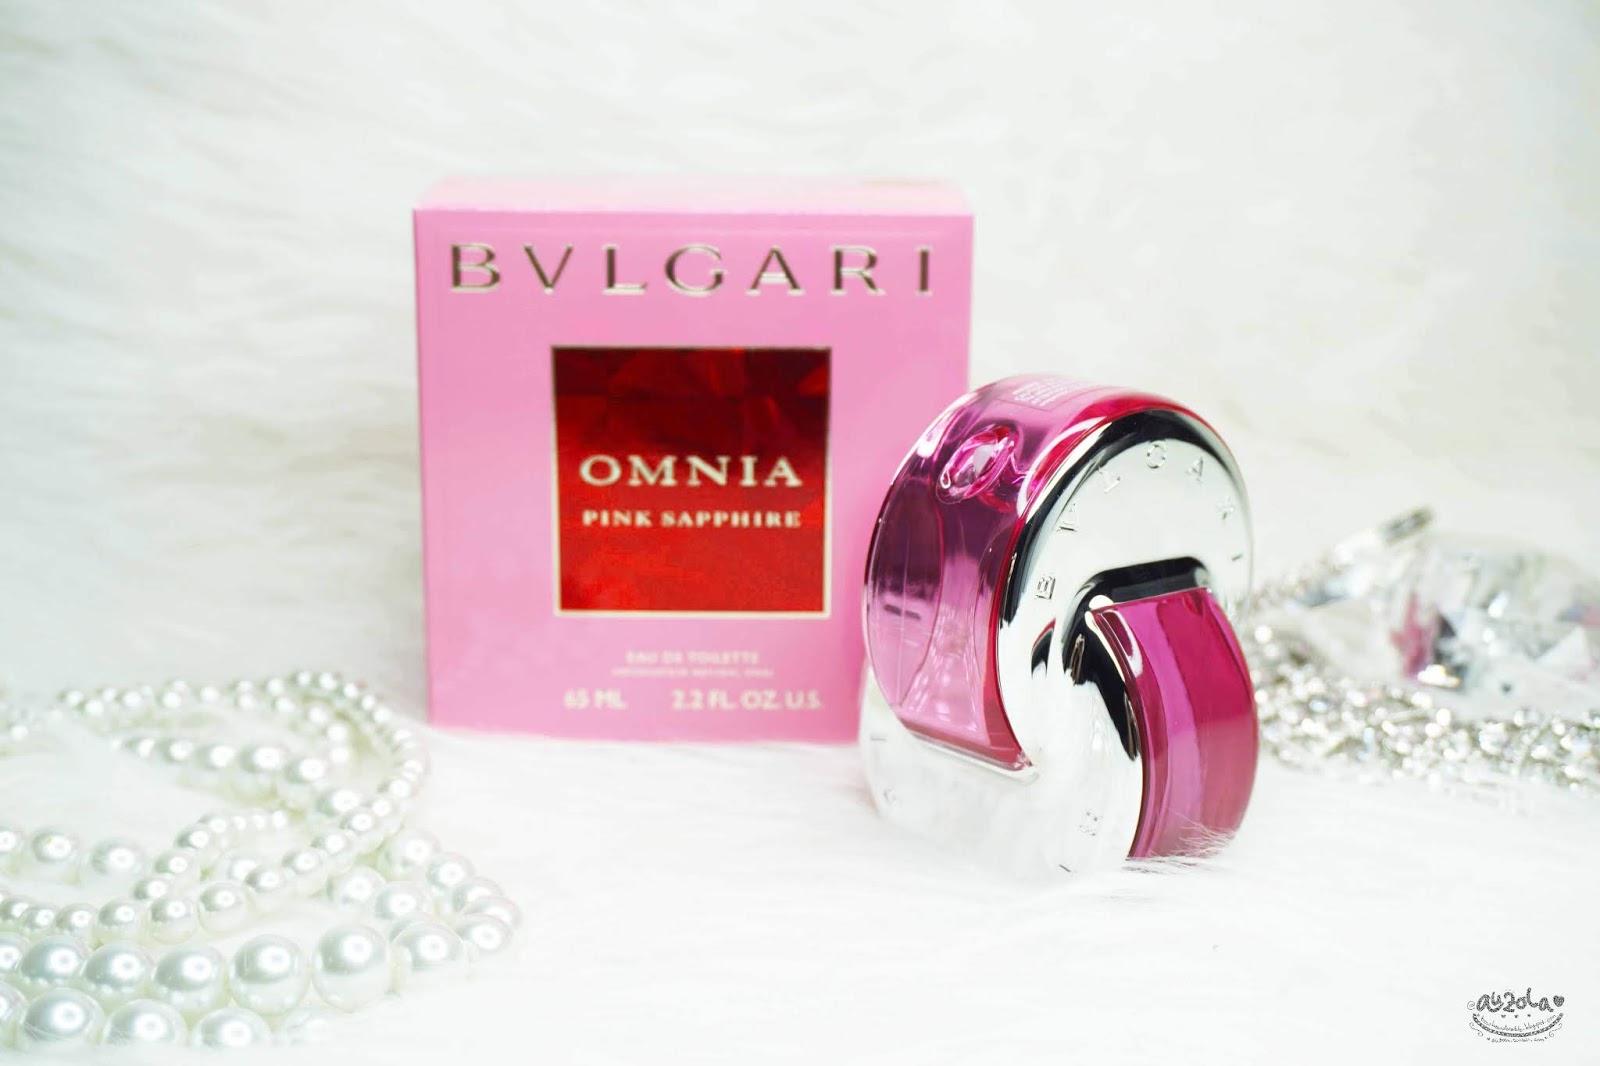 bvlgari omnia pink sapphire review